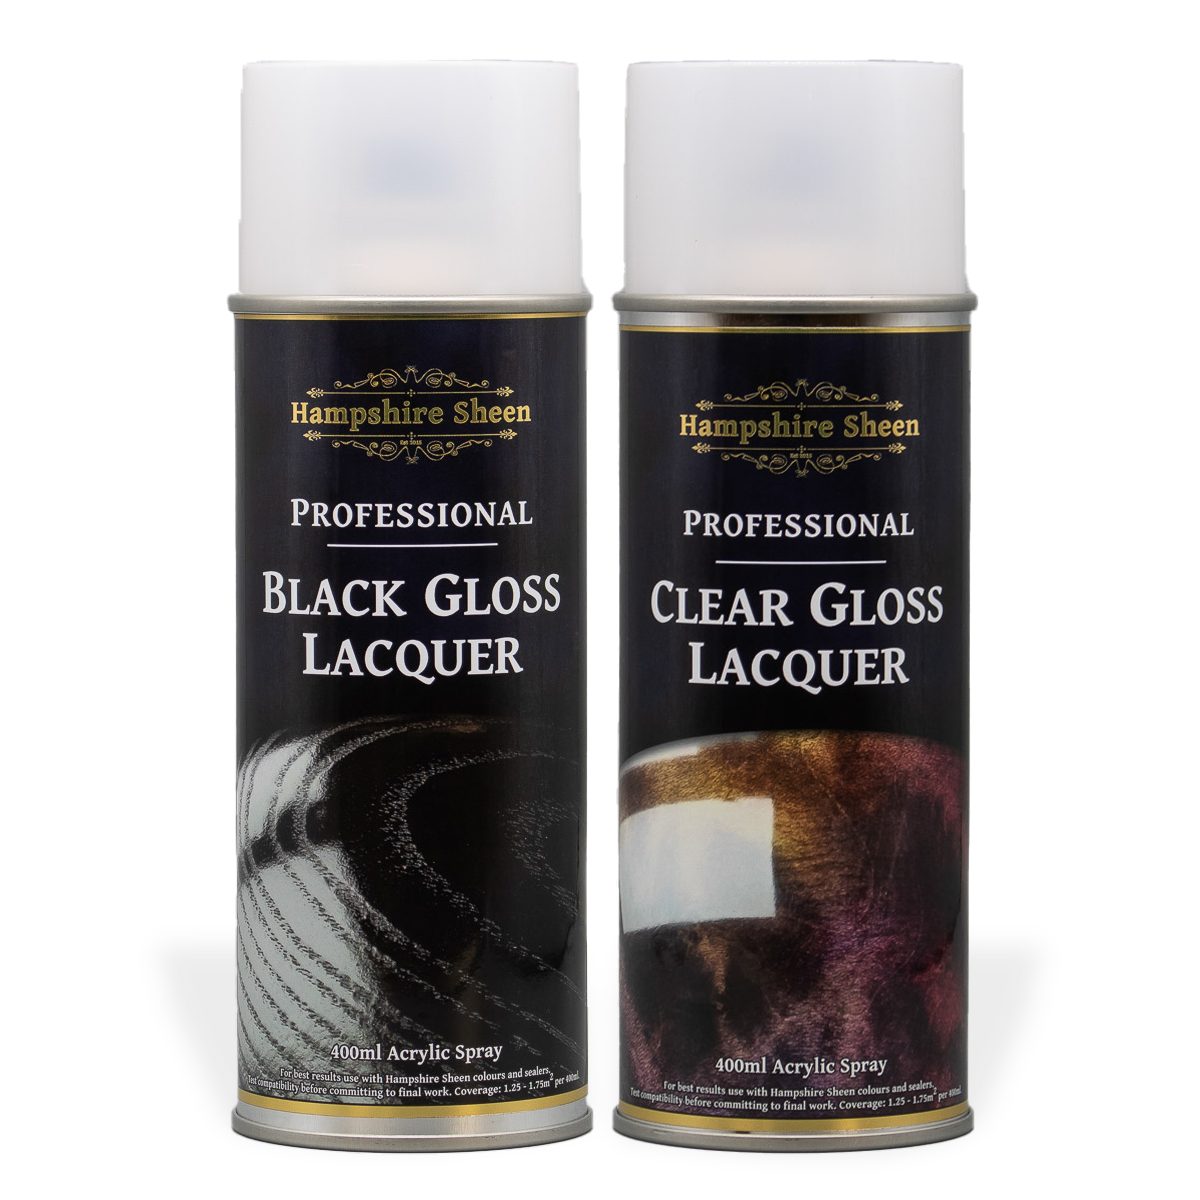 Chestnut Black Super Glue Cyanoacrylate Superglue 20g - Yandles